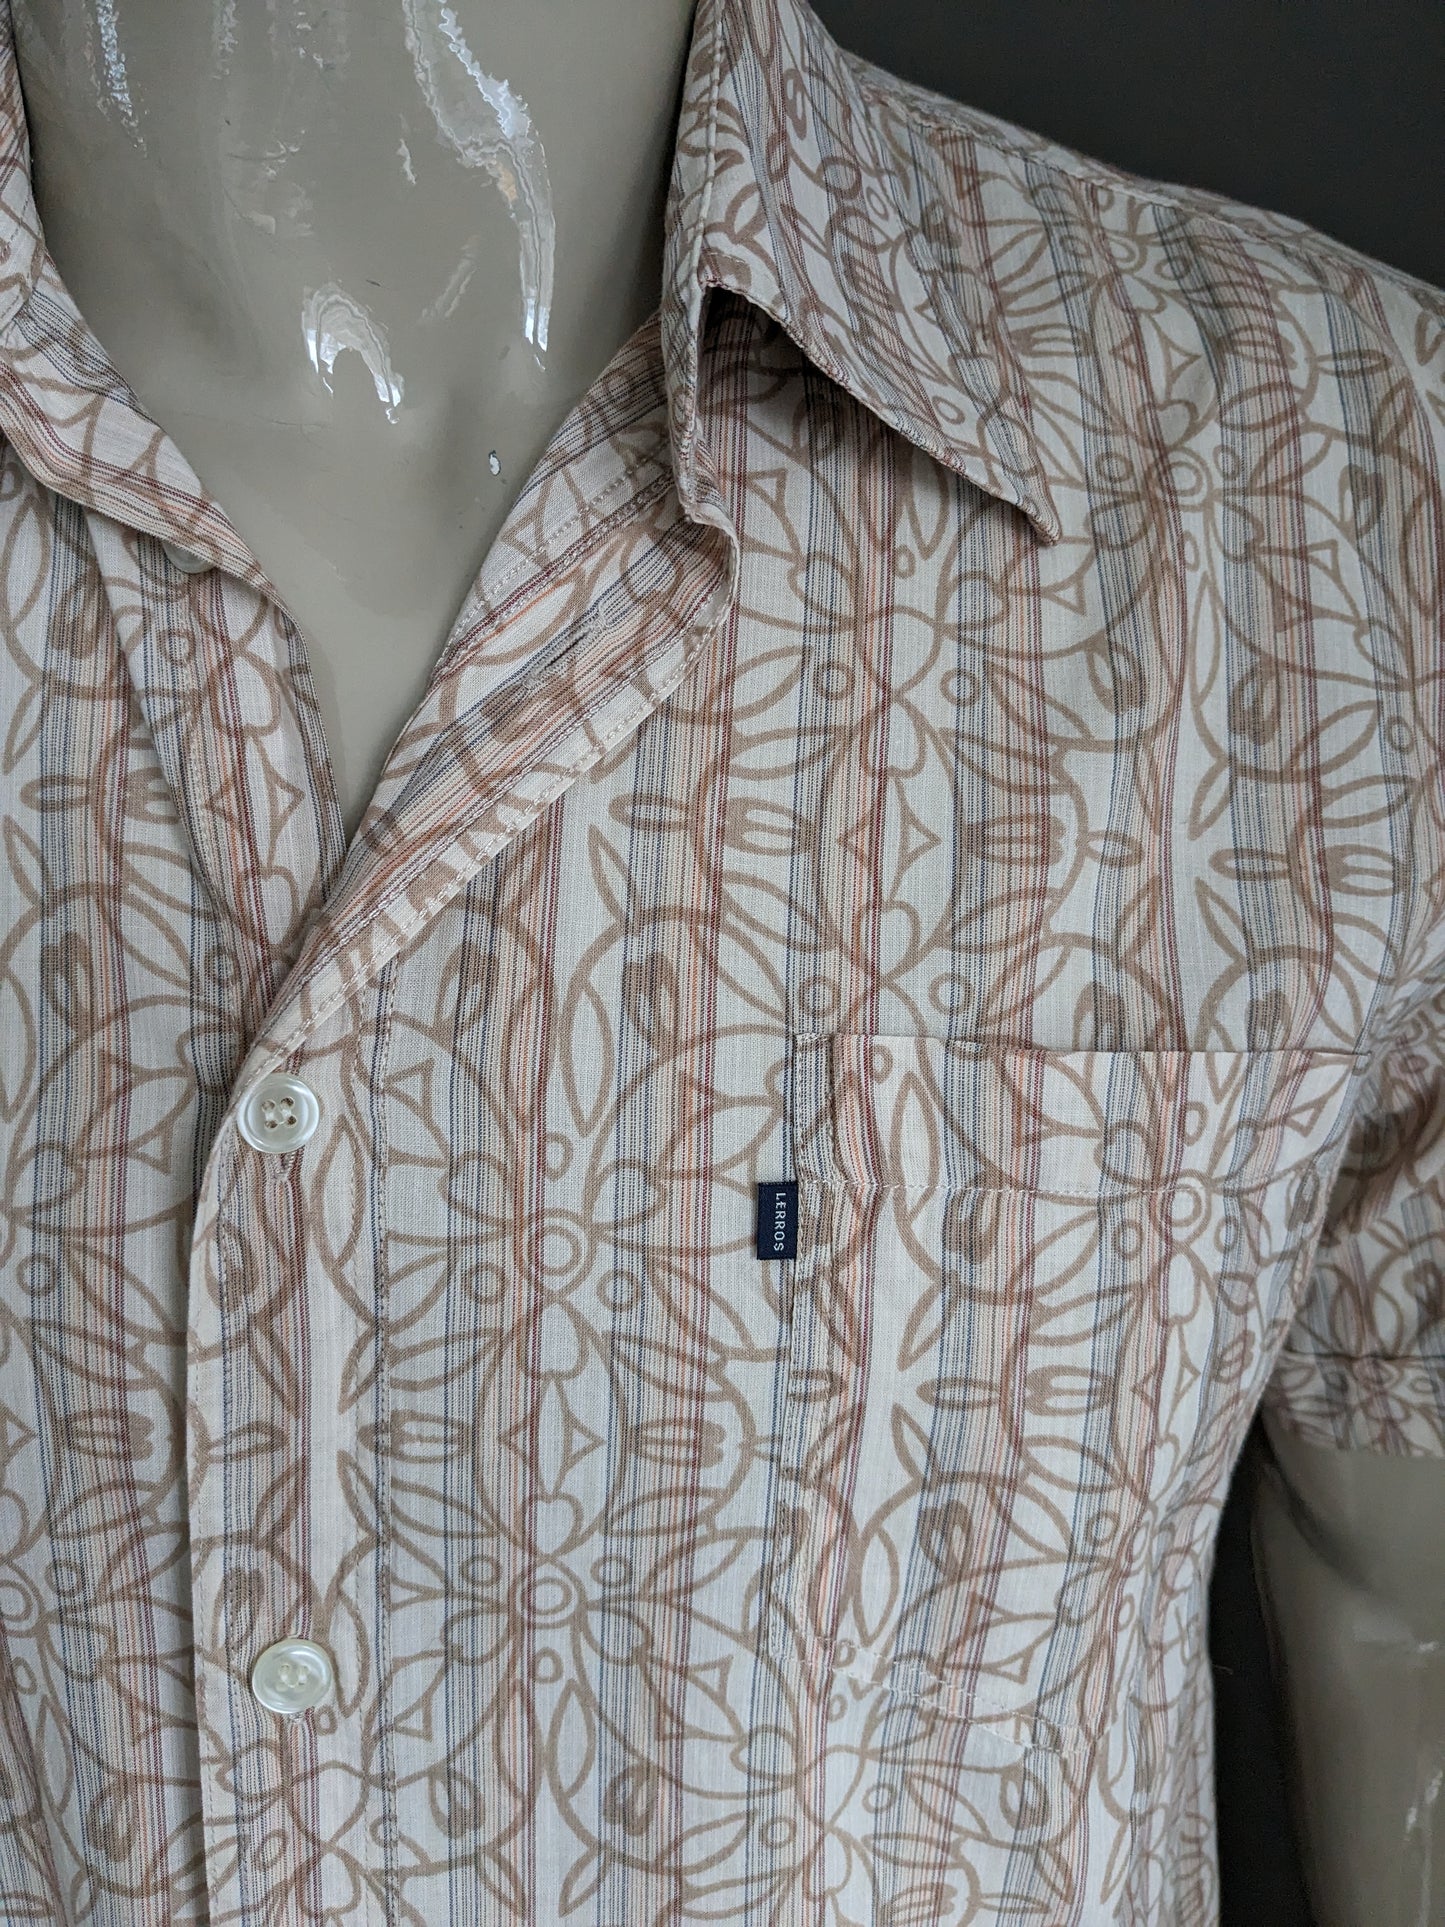 Lerros shirt short sleeve. Light brown floral print / striped. Size XL.